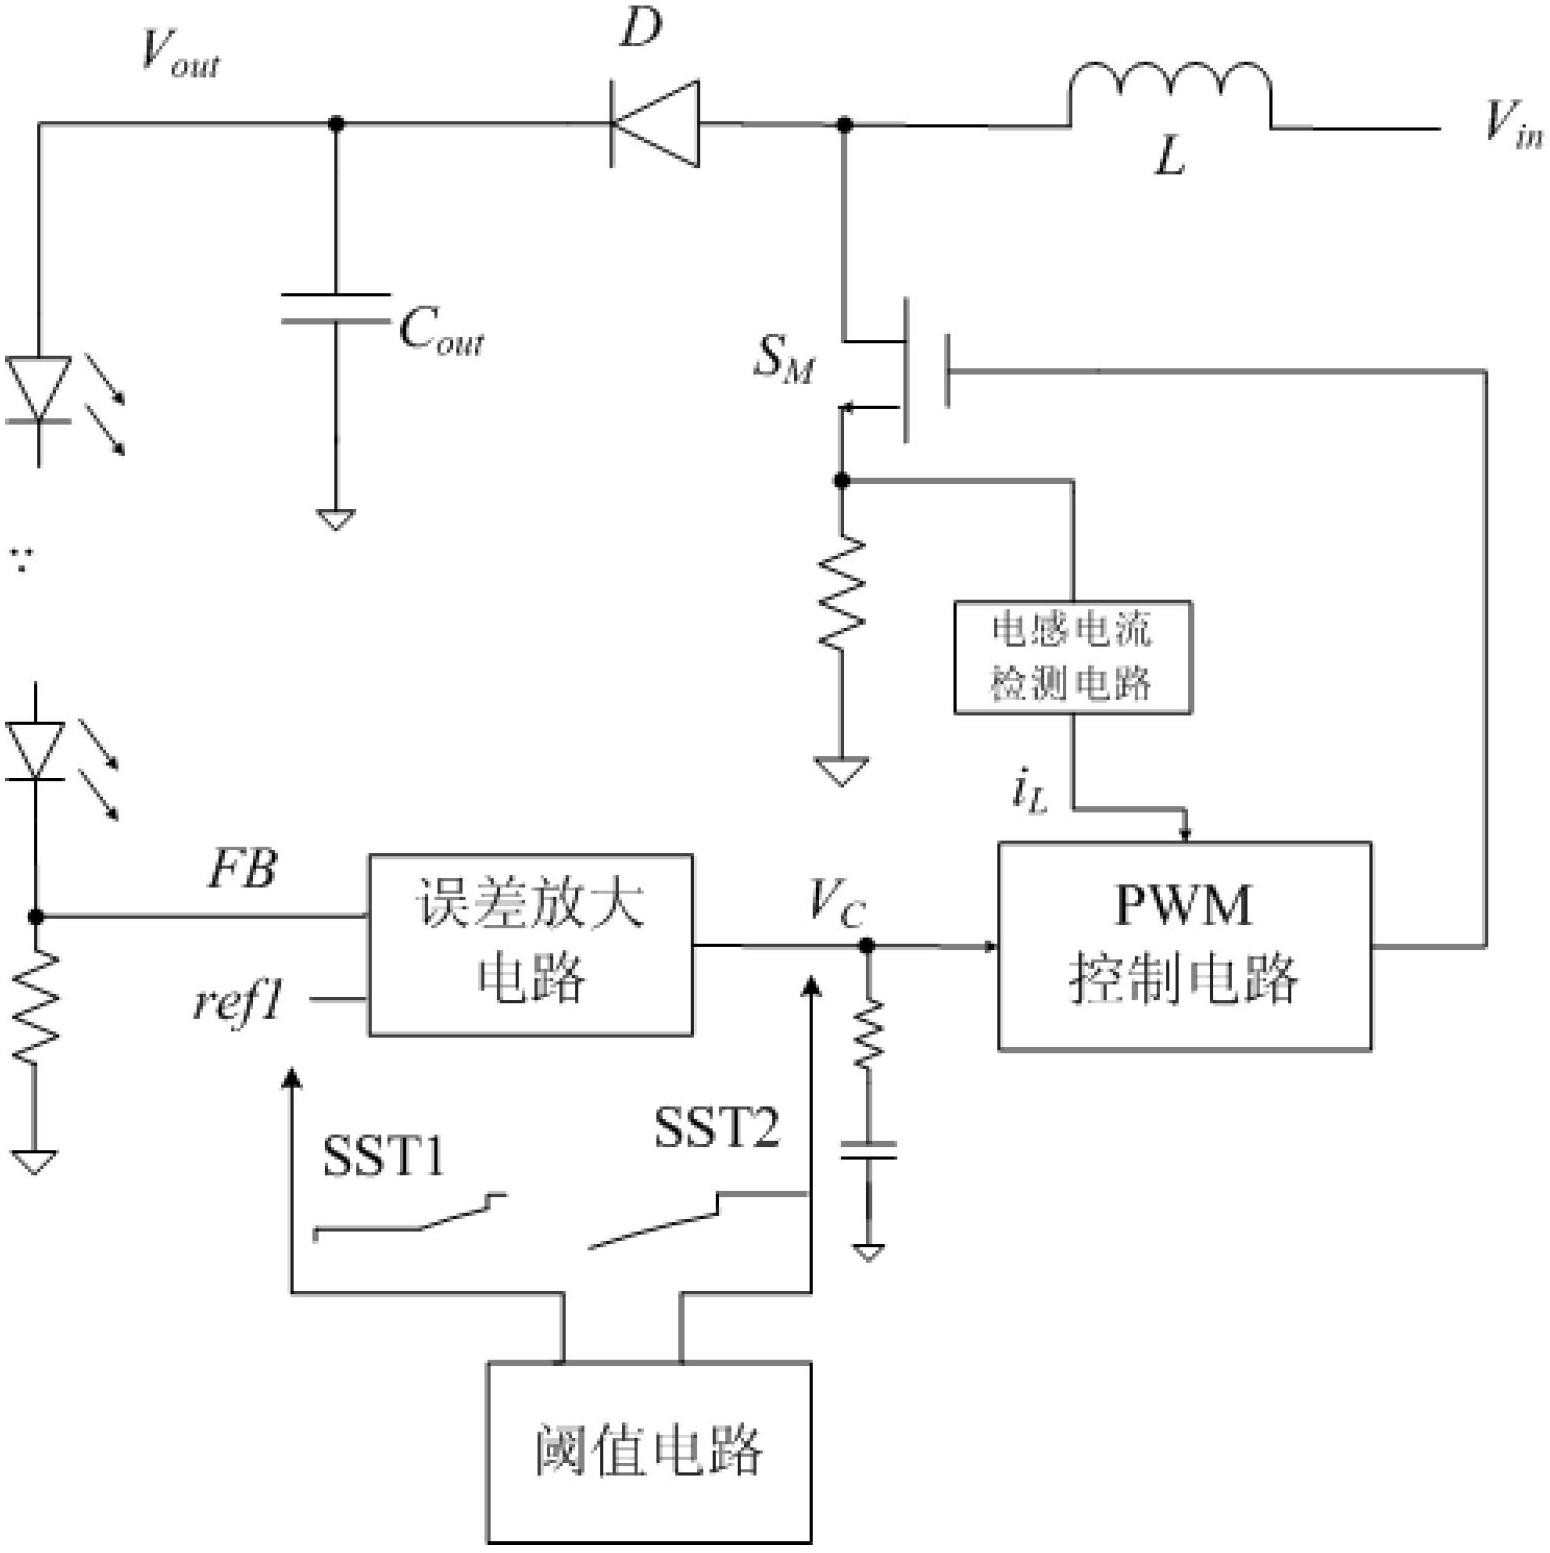 LED (Light Emitting Diode) driving circuit